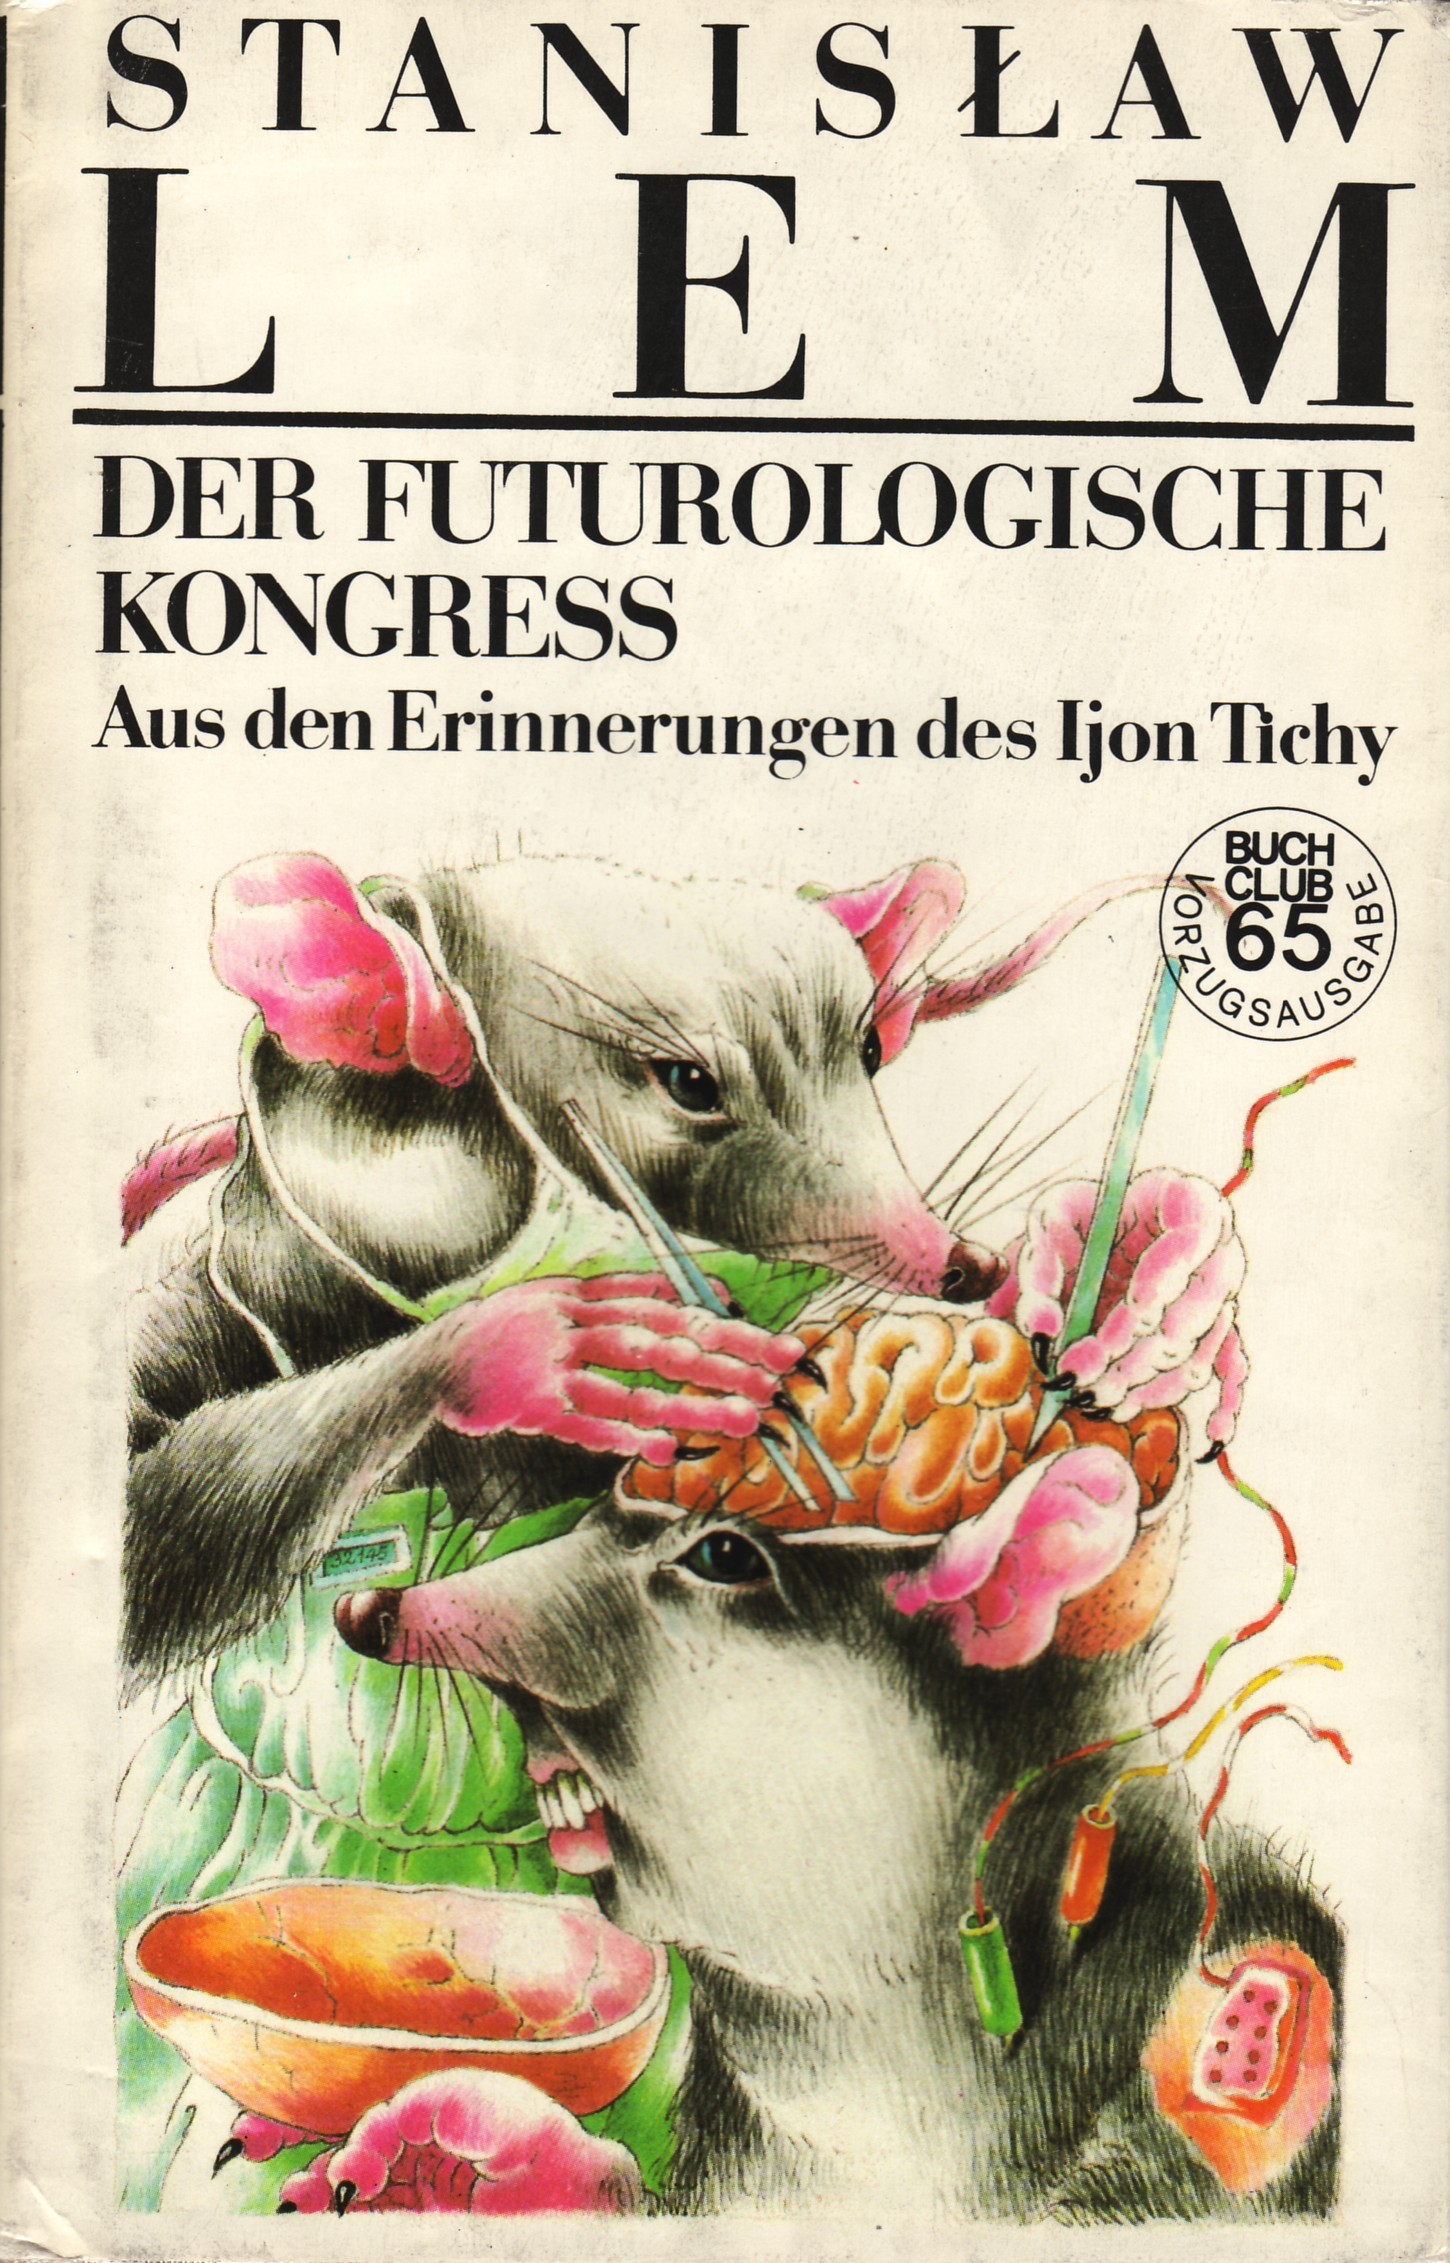 Futurological Congress German Volk und Welt 1986 (buch club).jpg